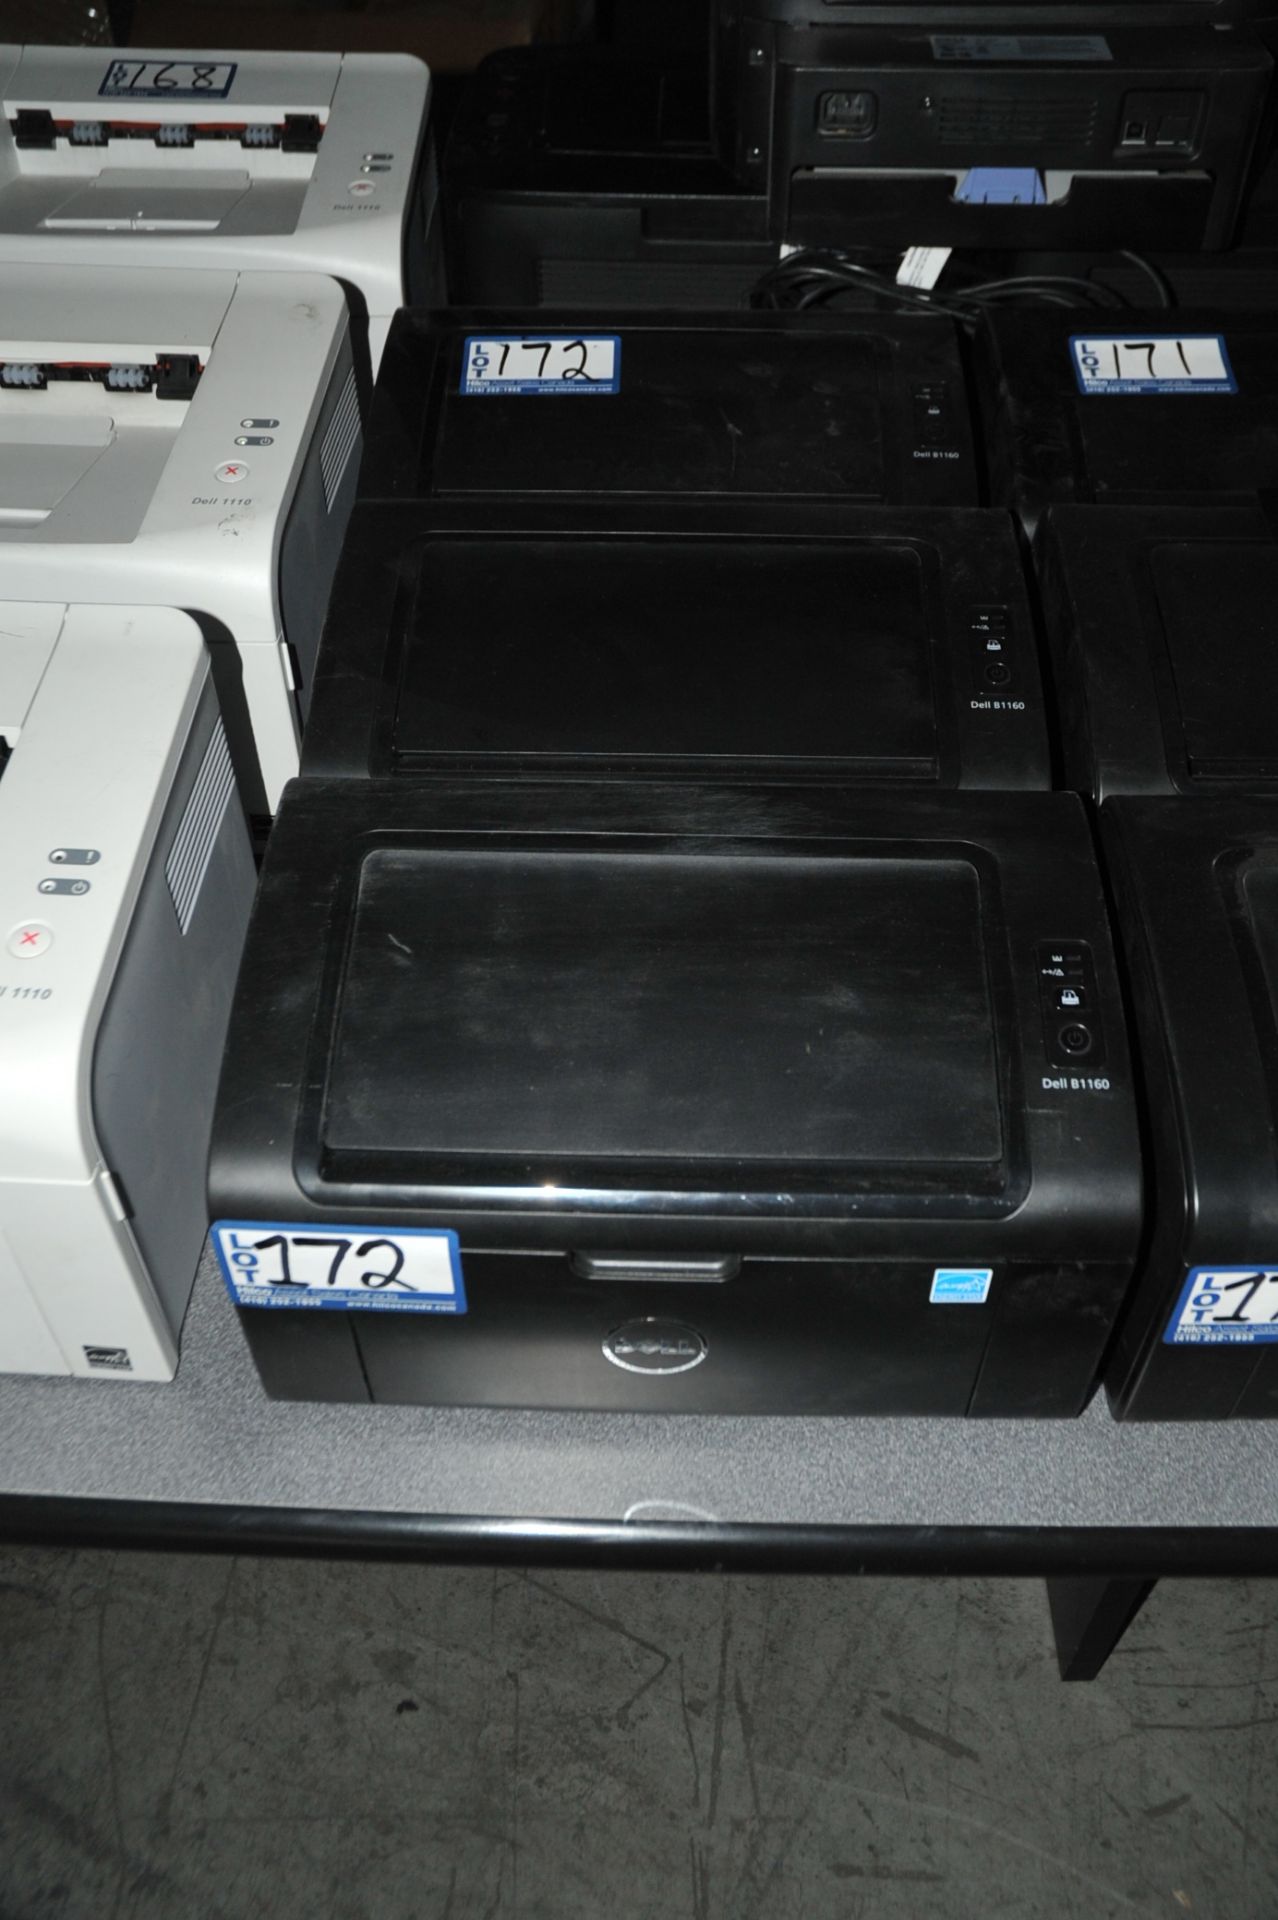 (3) Dell Model B1160 Printers